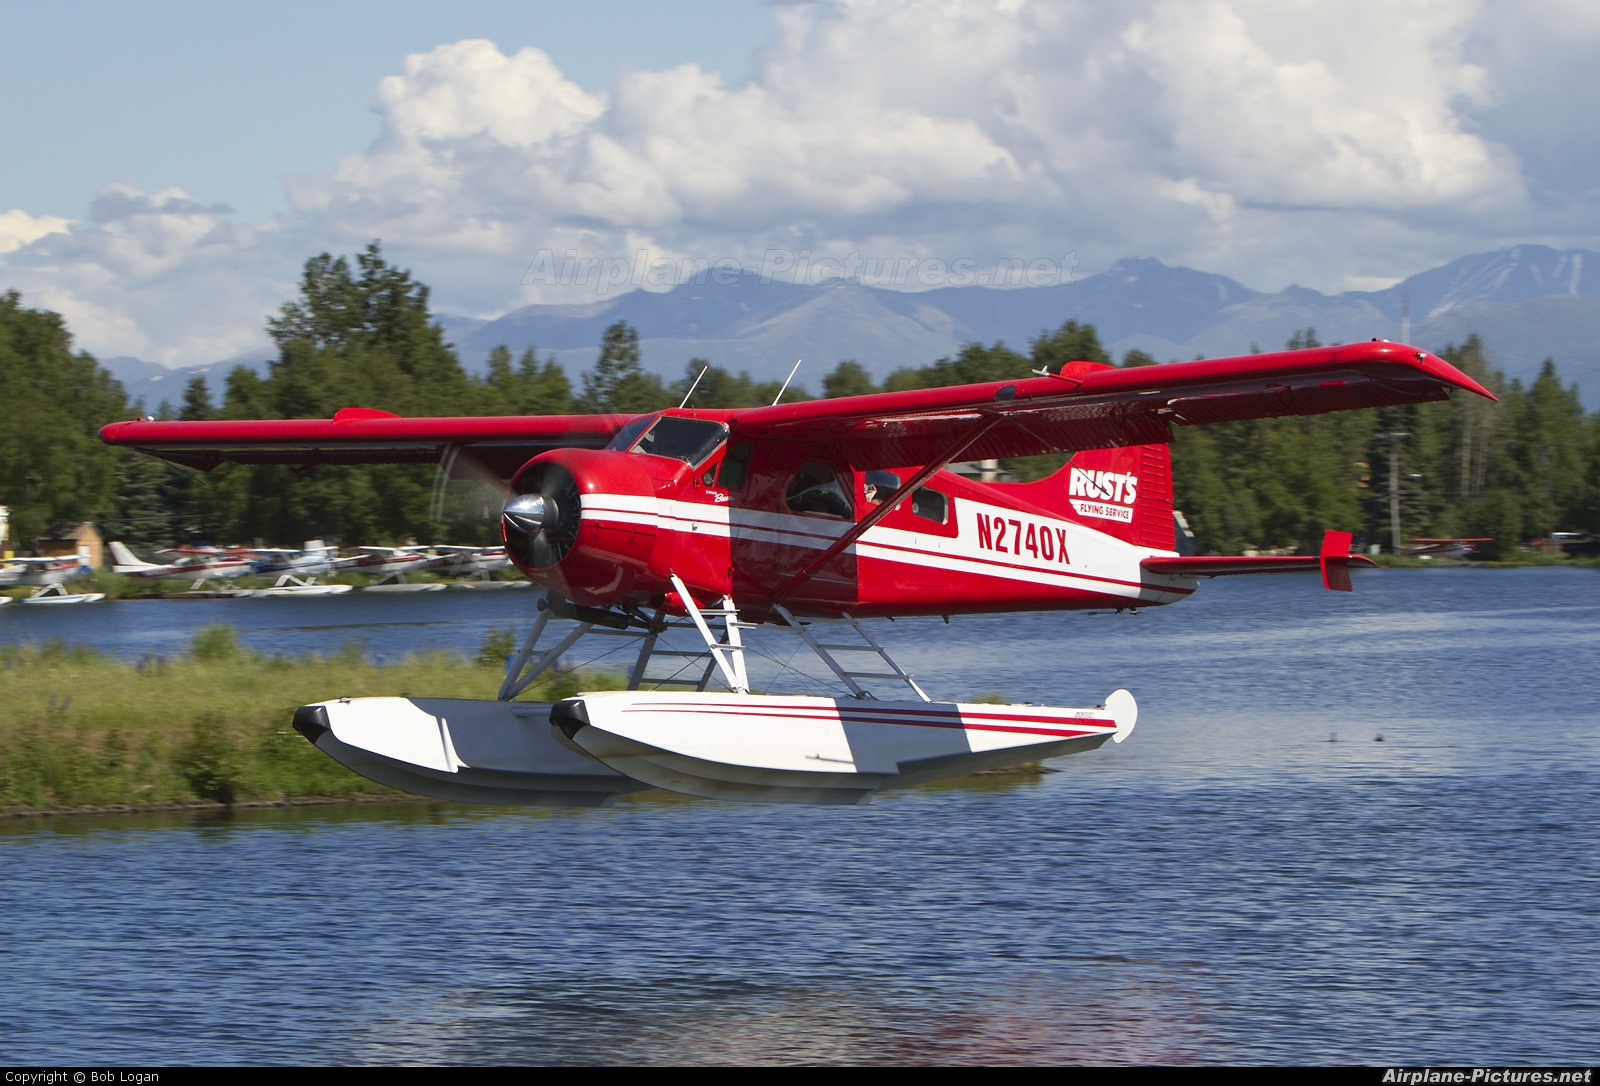 Rusts Flying Services N2740X aircraft at Anchorage - Lake Hood